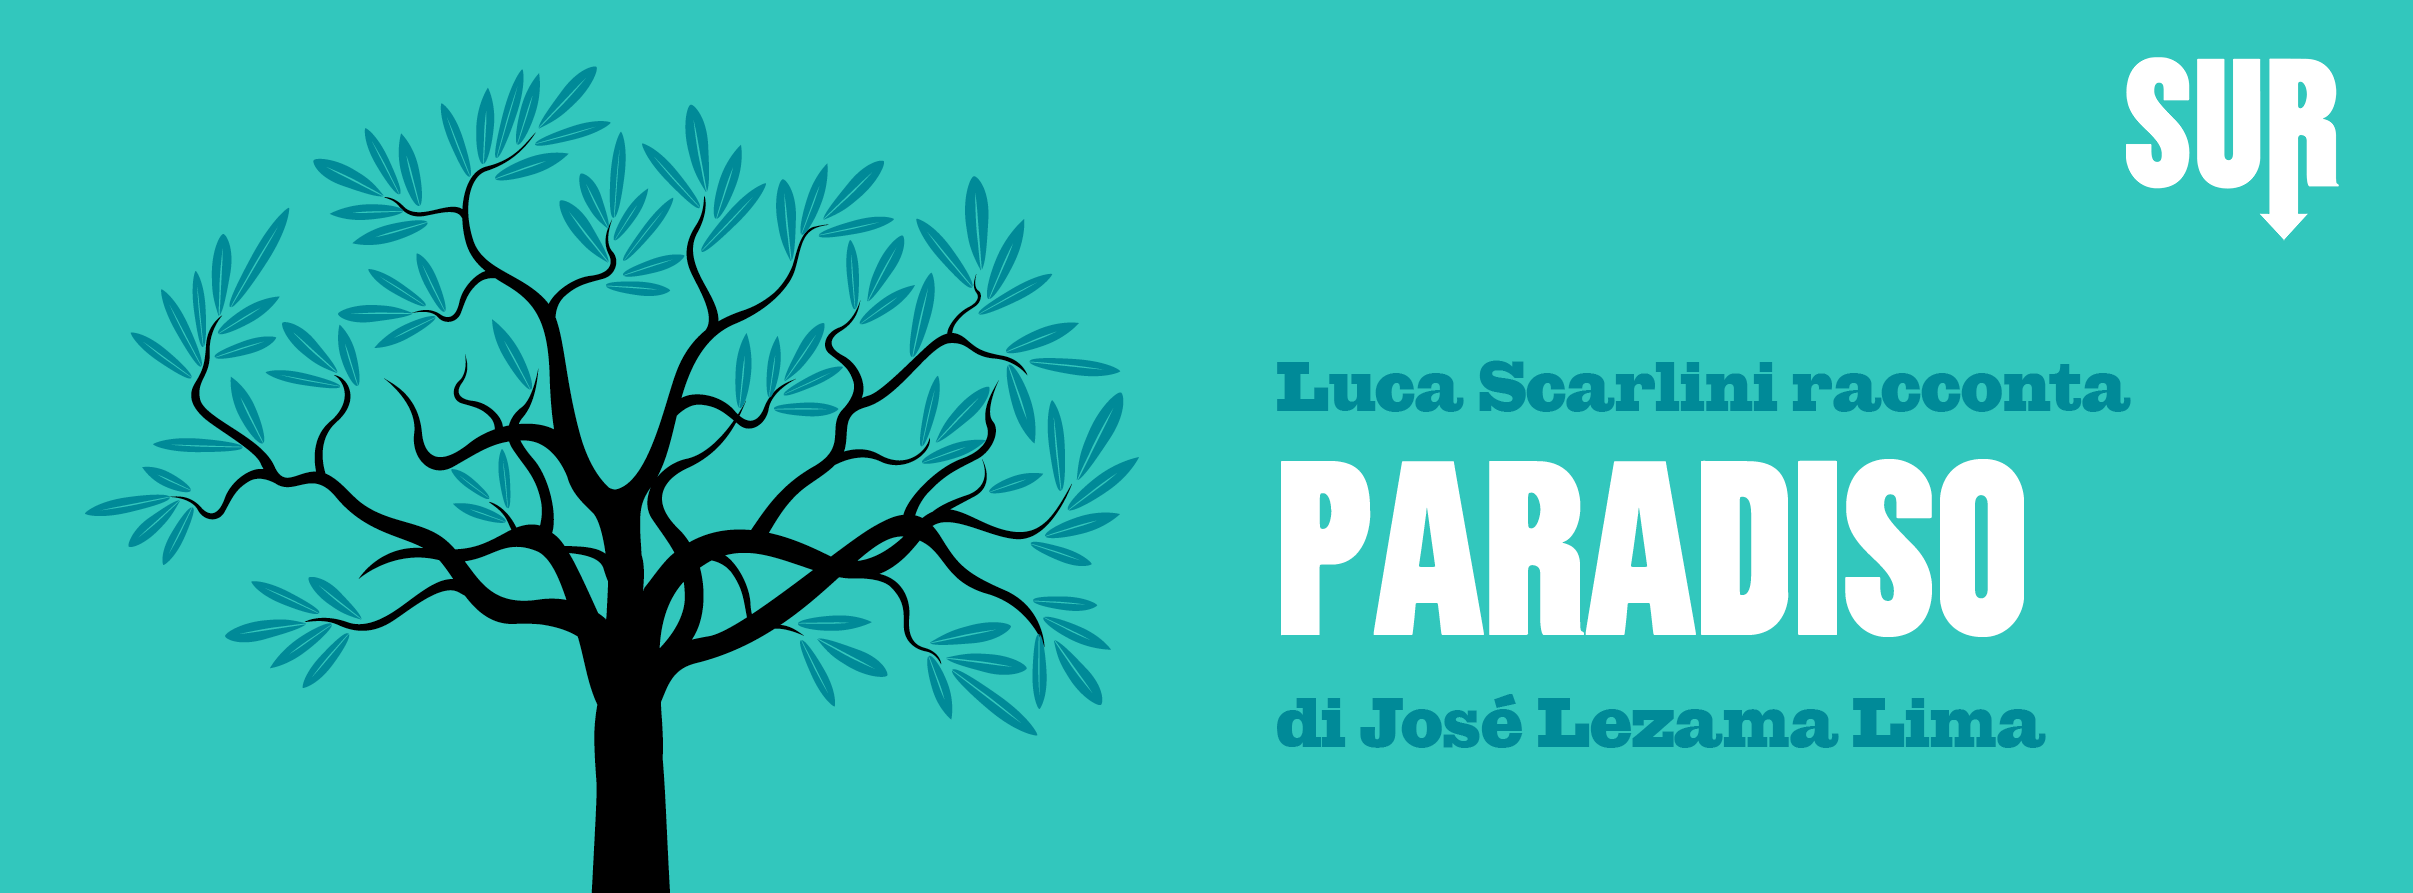 paradiso scarlini banner